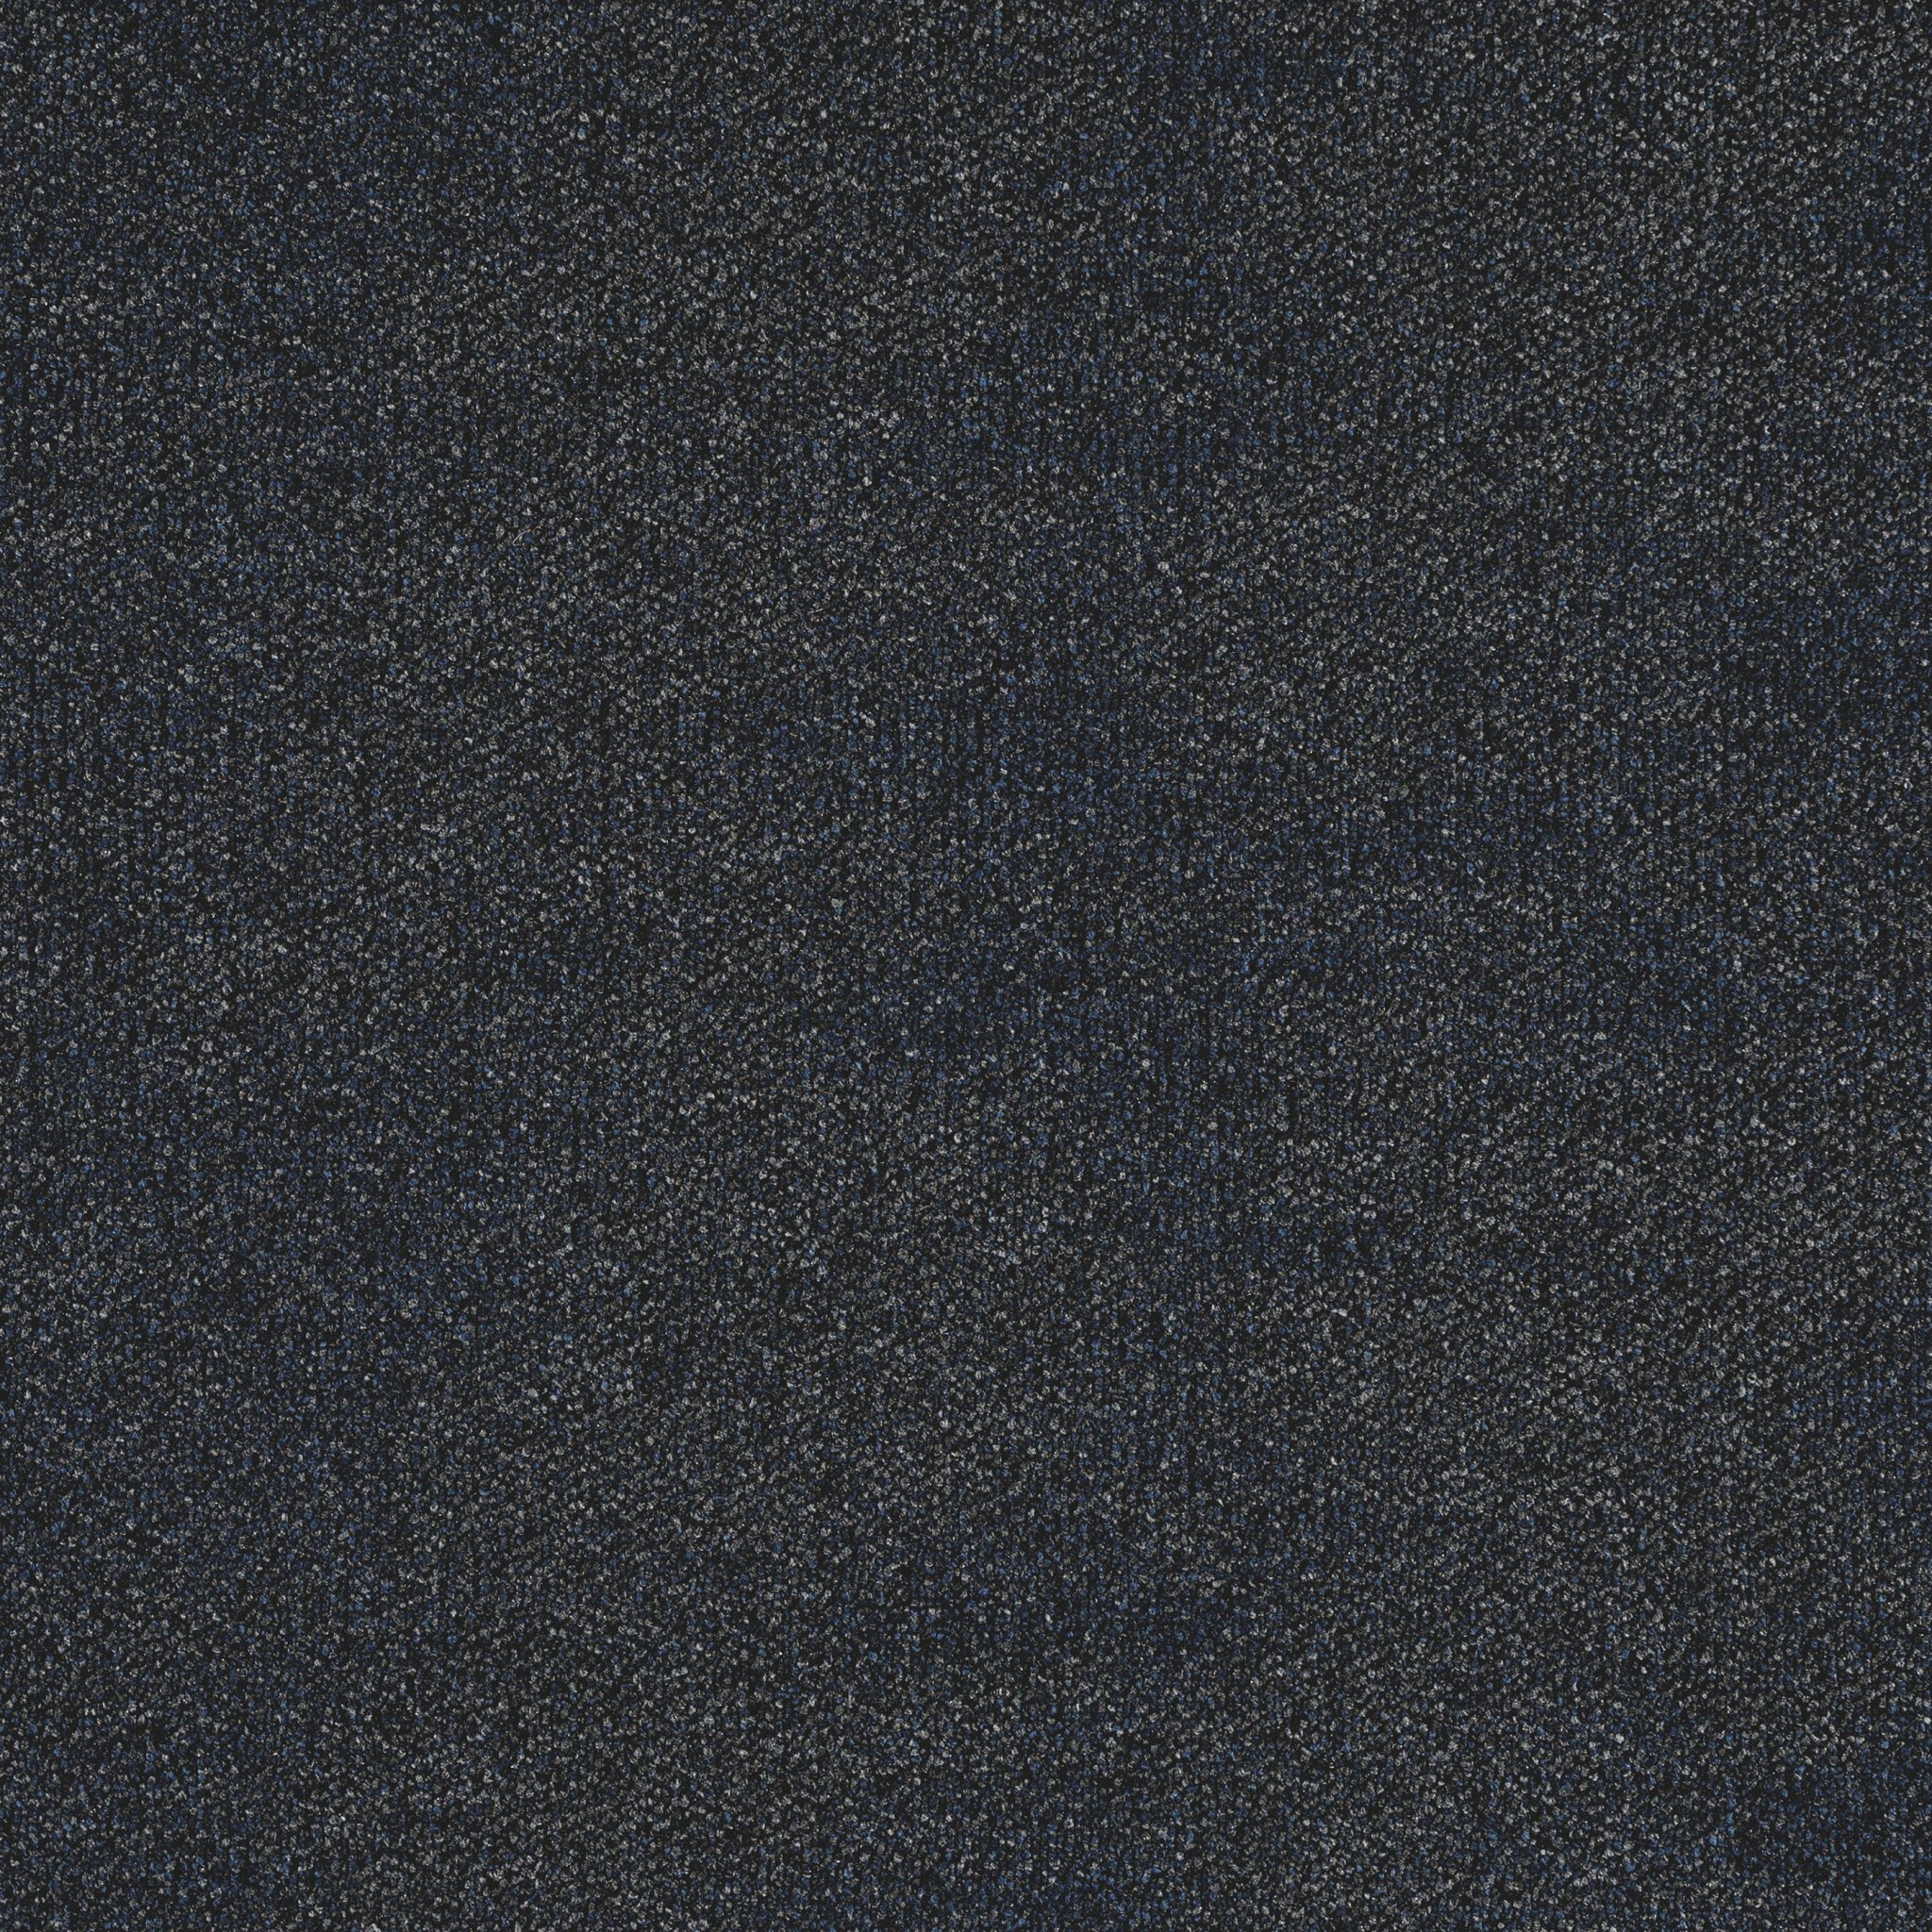 Blizzard - a non-directional design carpet tile by Duraflor